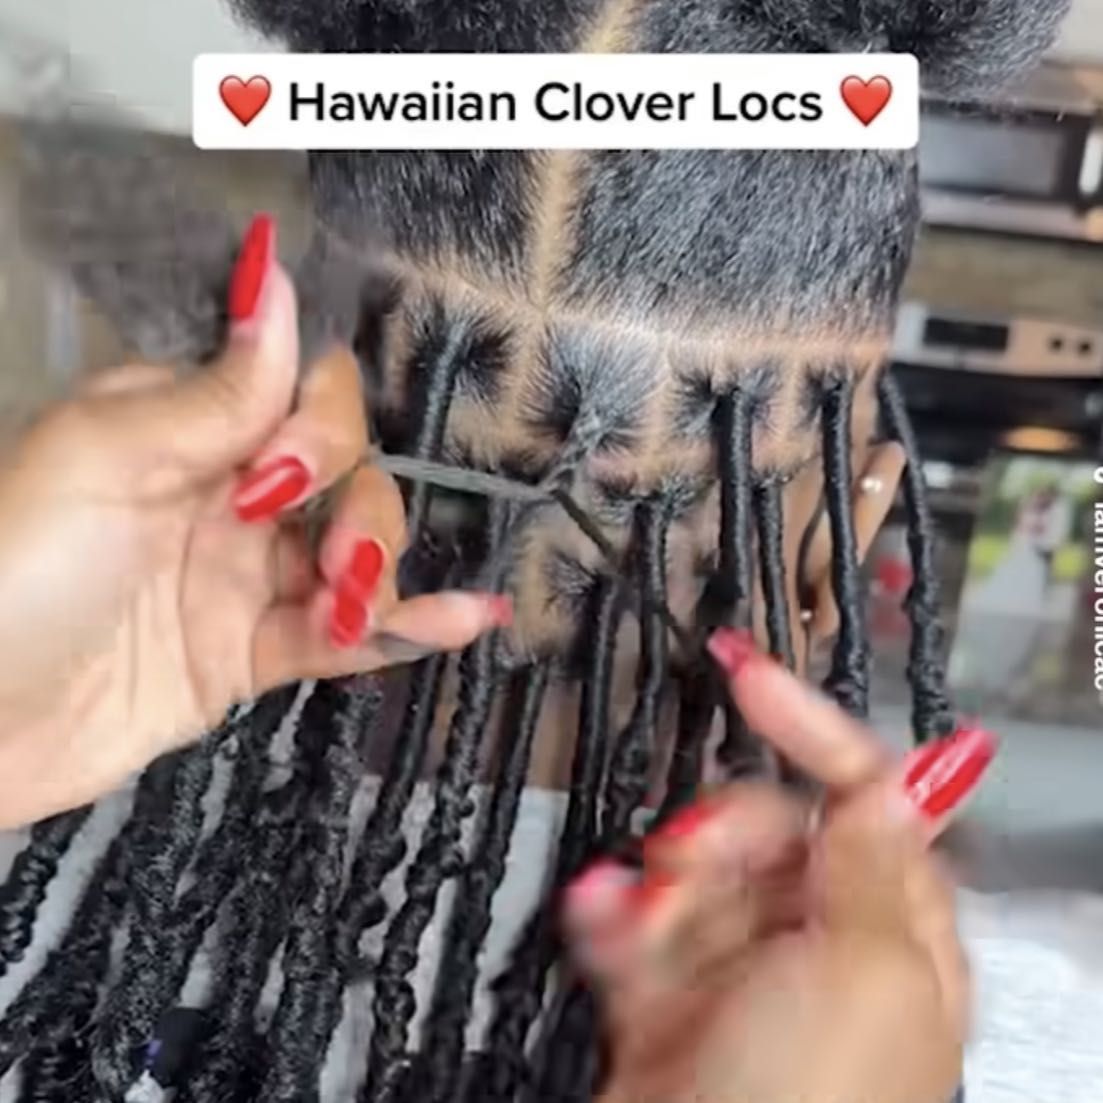 ￼ Hawaiian Clover Locs portfolio